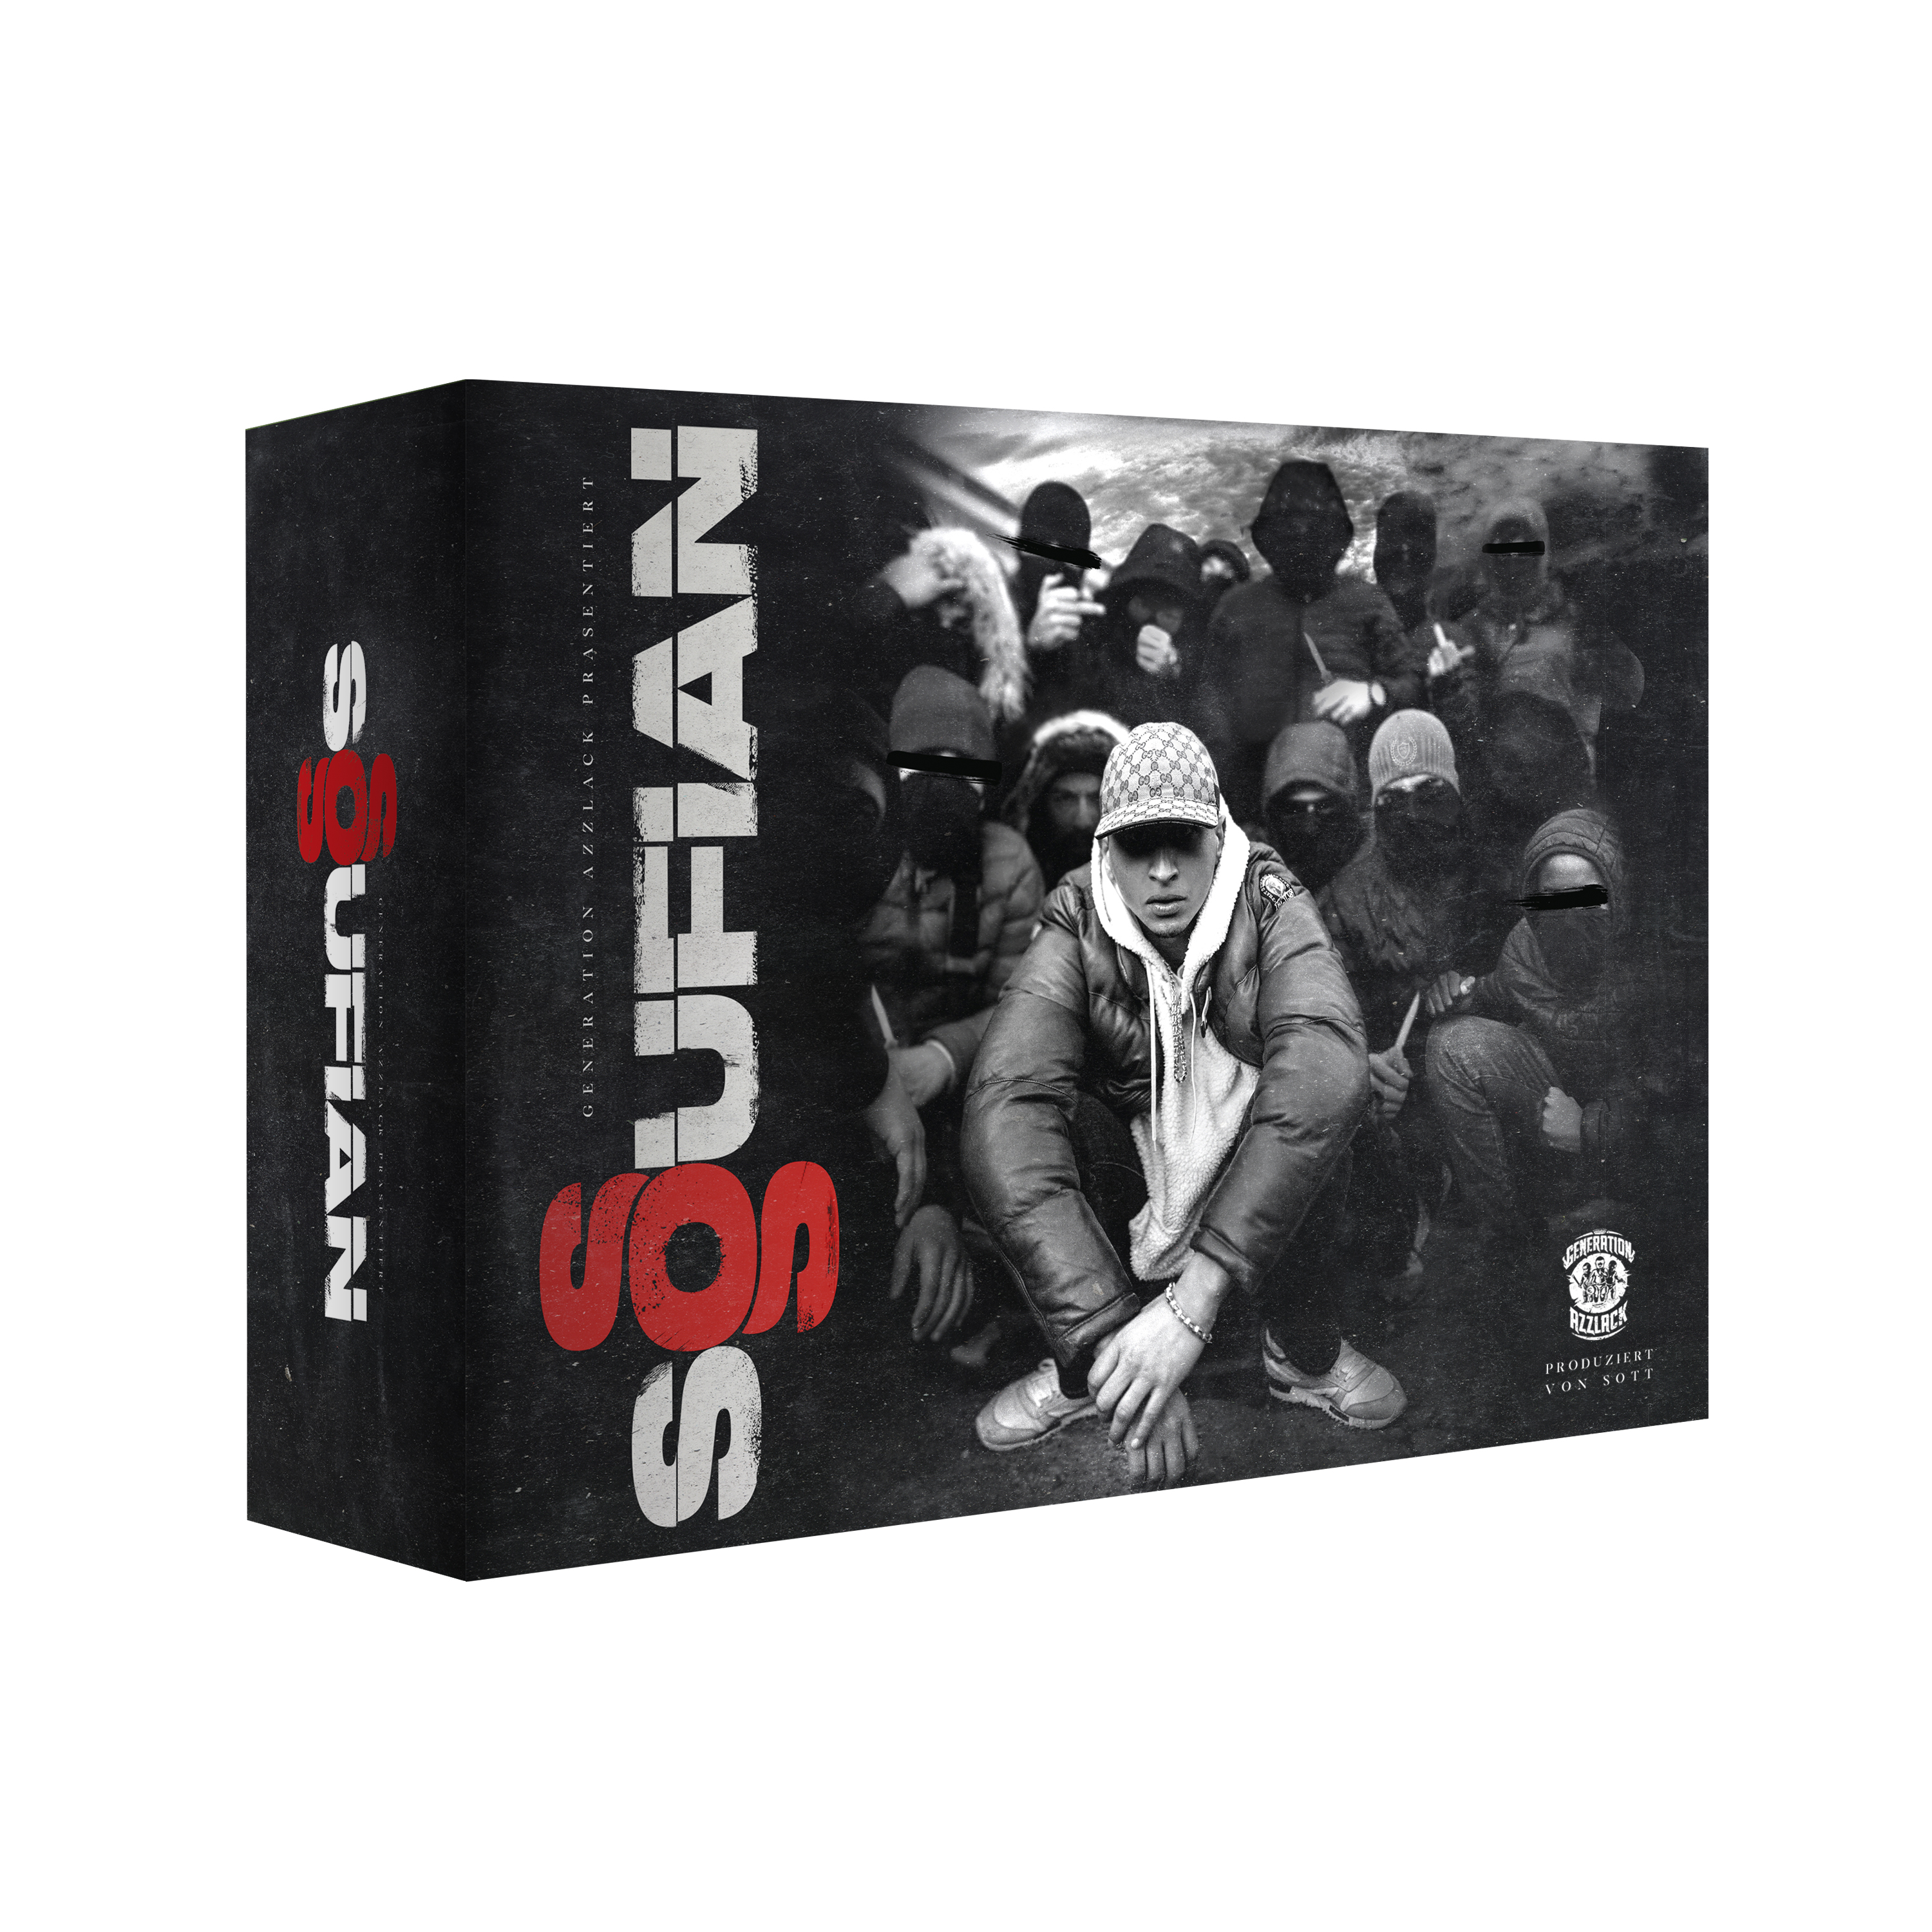 Soufian S.O.S.(LTD - (CD + Merchandising) - Box)